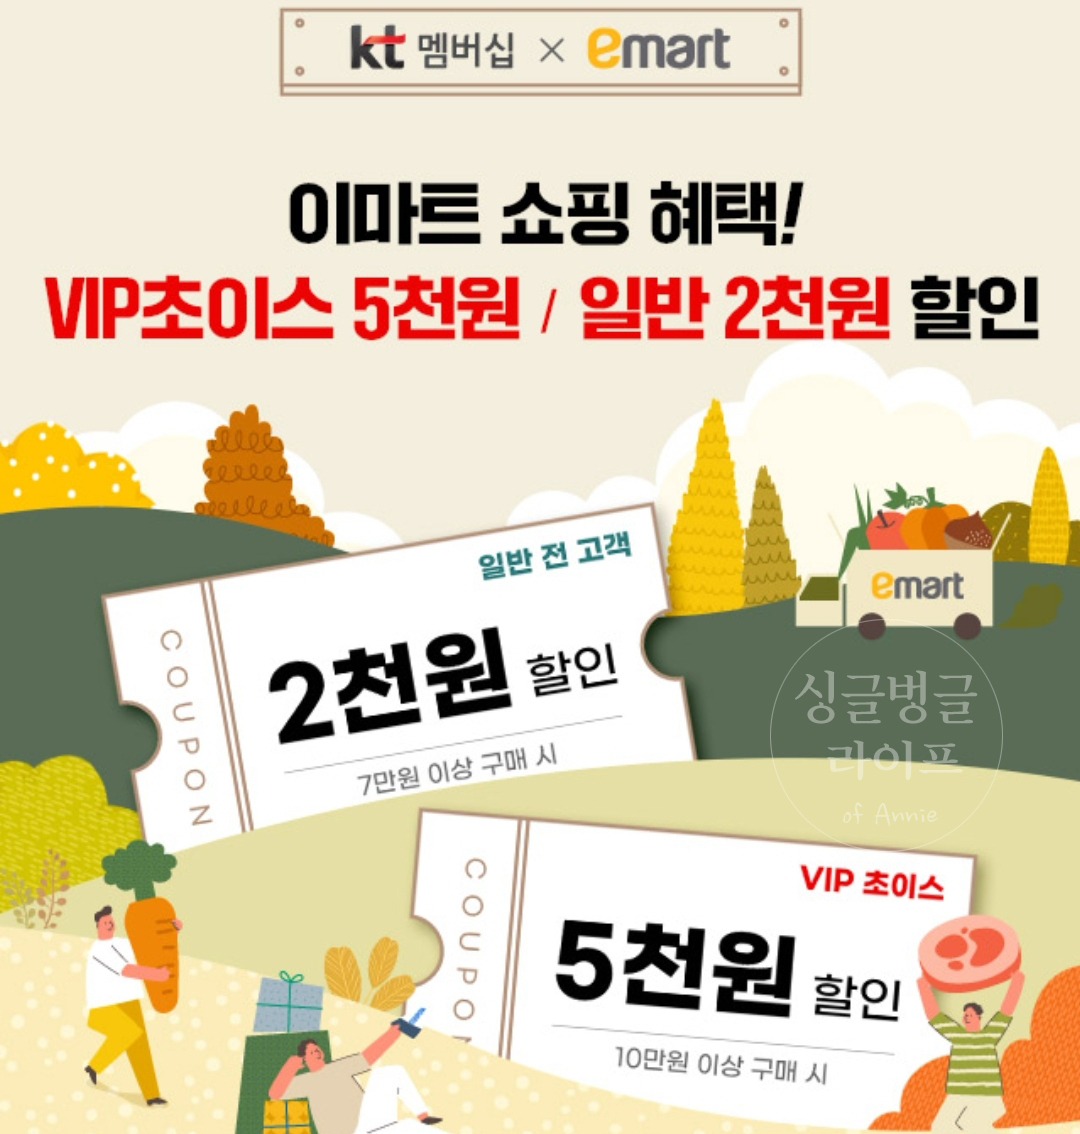 KT VIP 초이스 이마트 혜택